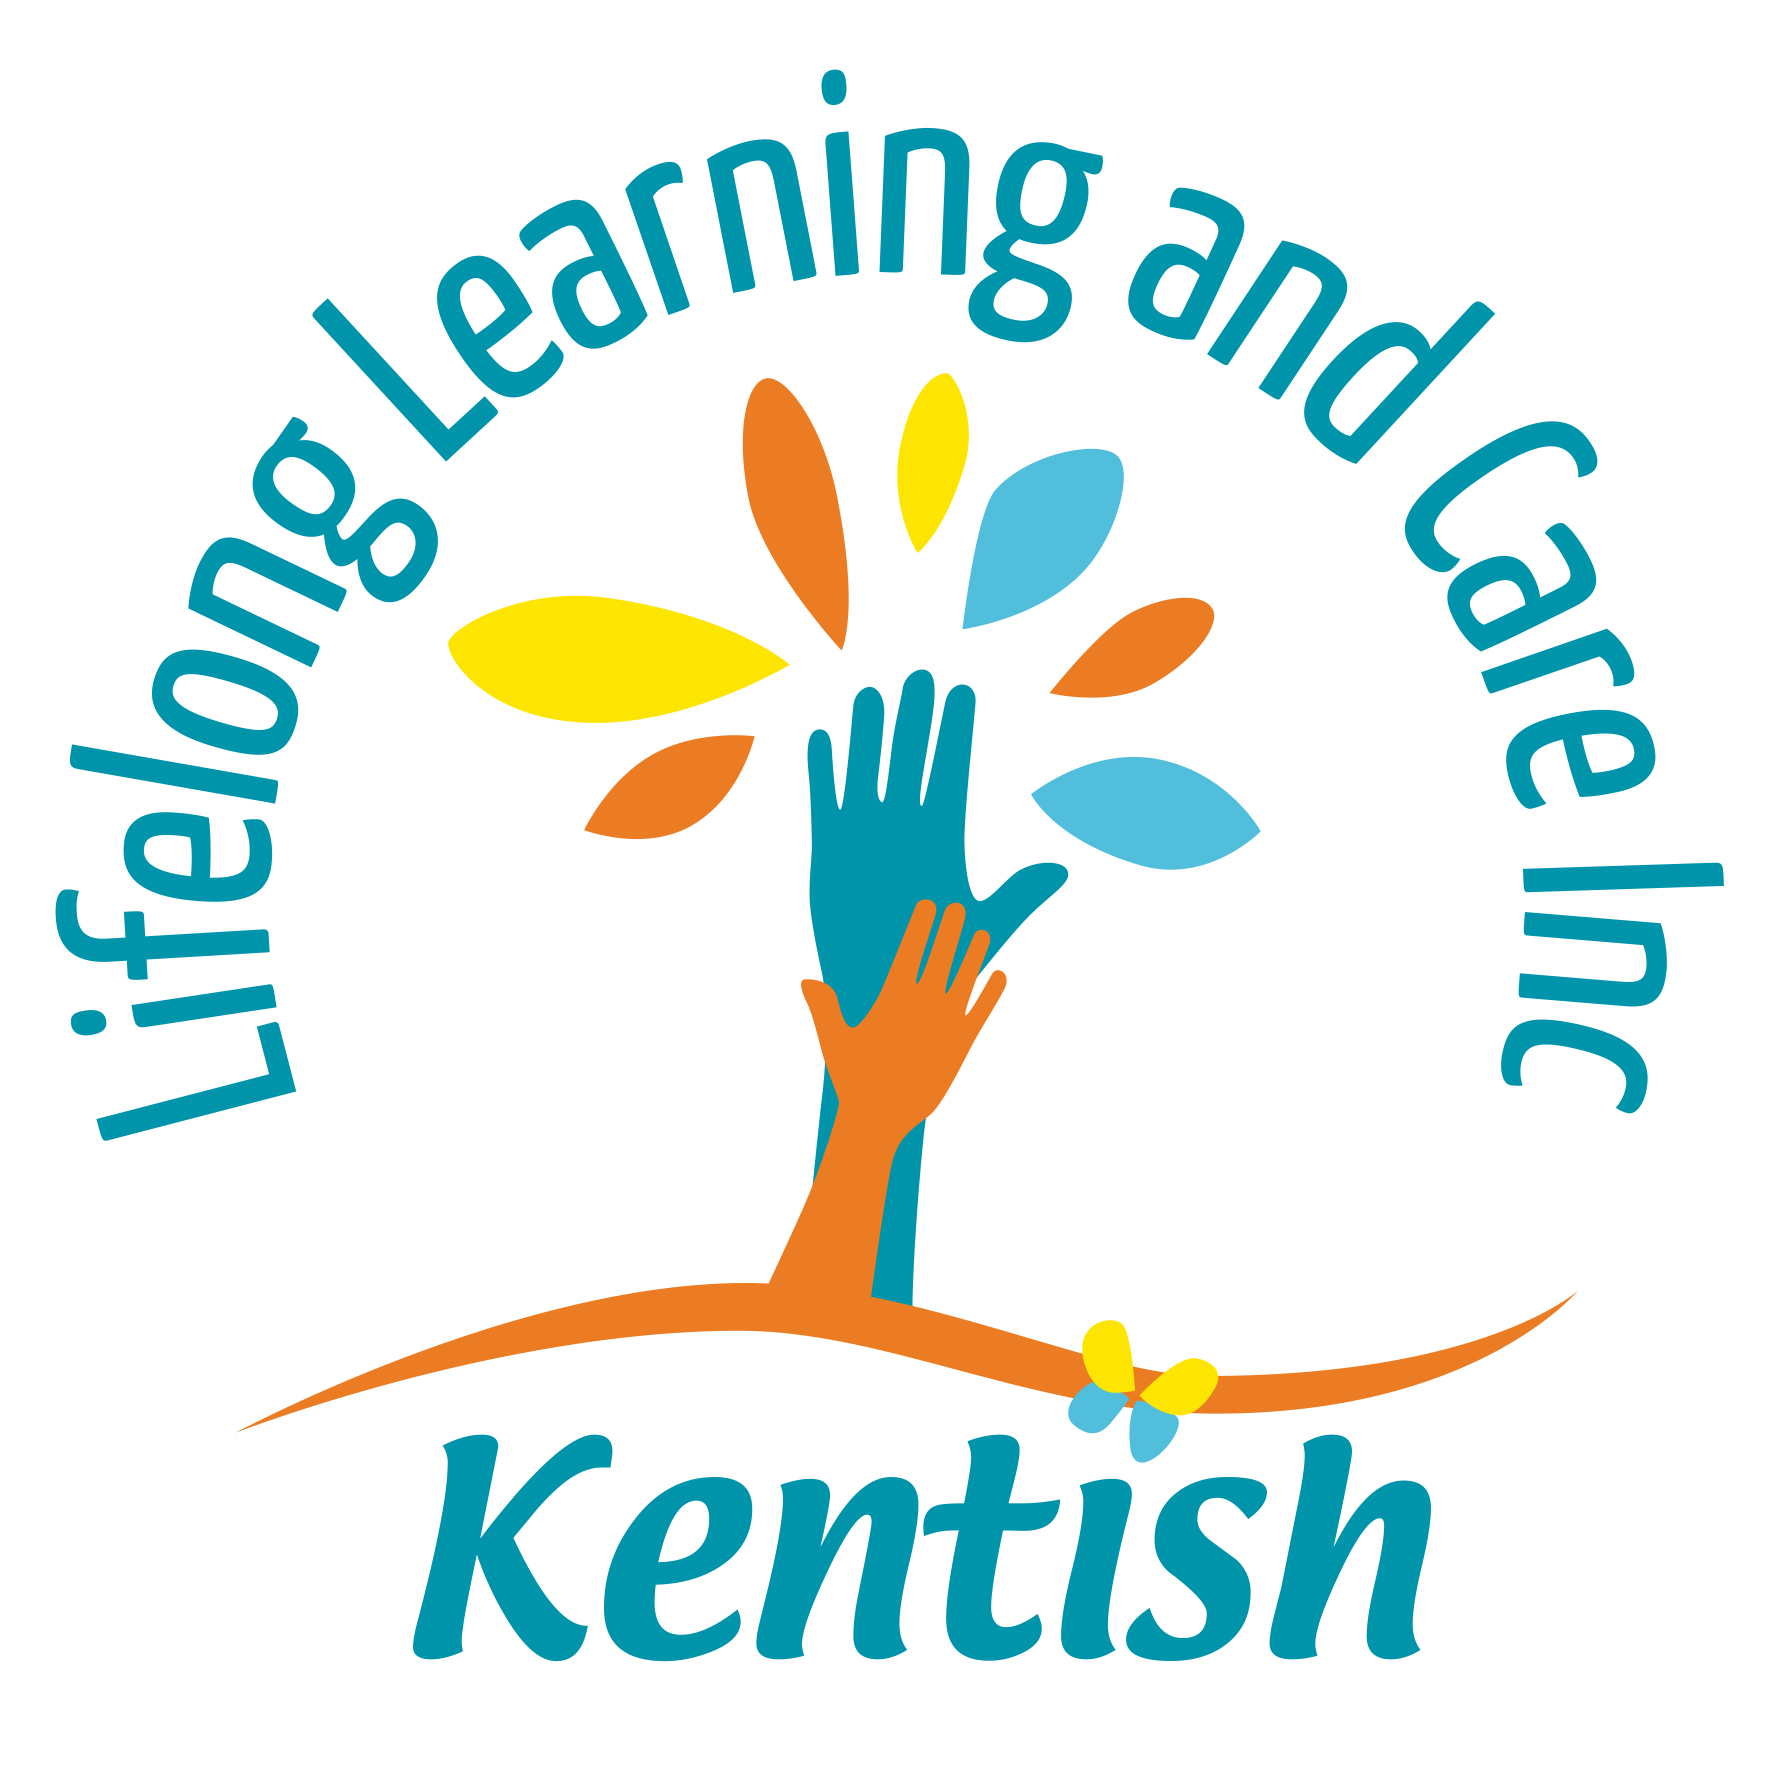 Sponsor - Outstanding Early Childhood Teacher - Kentish Lifelong Learning and Care